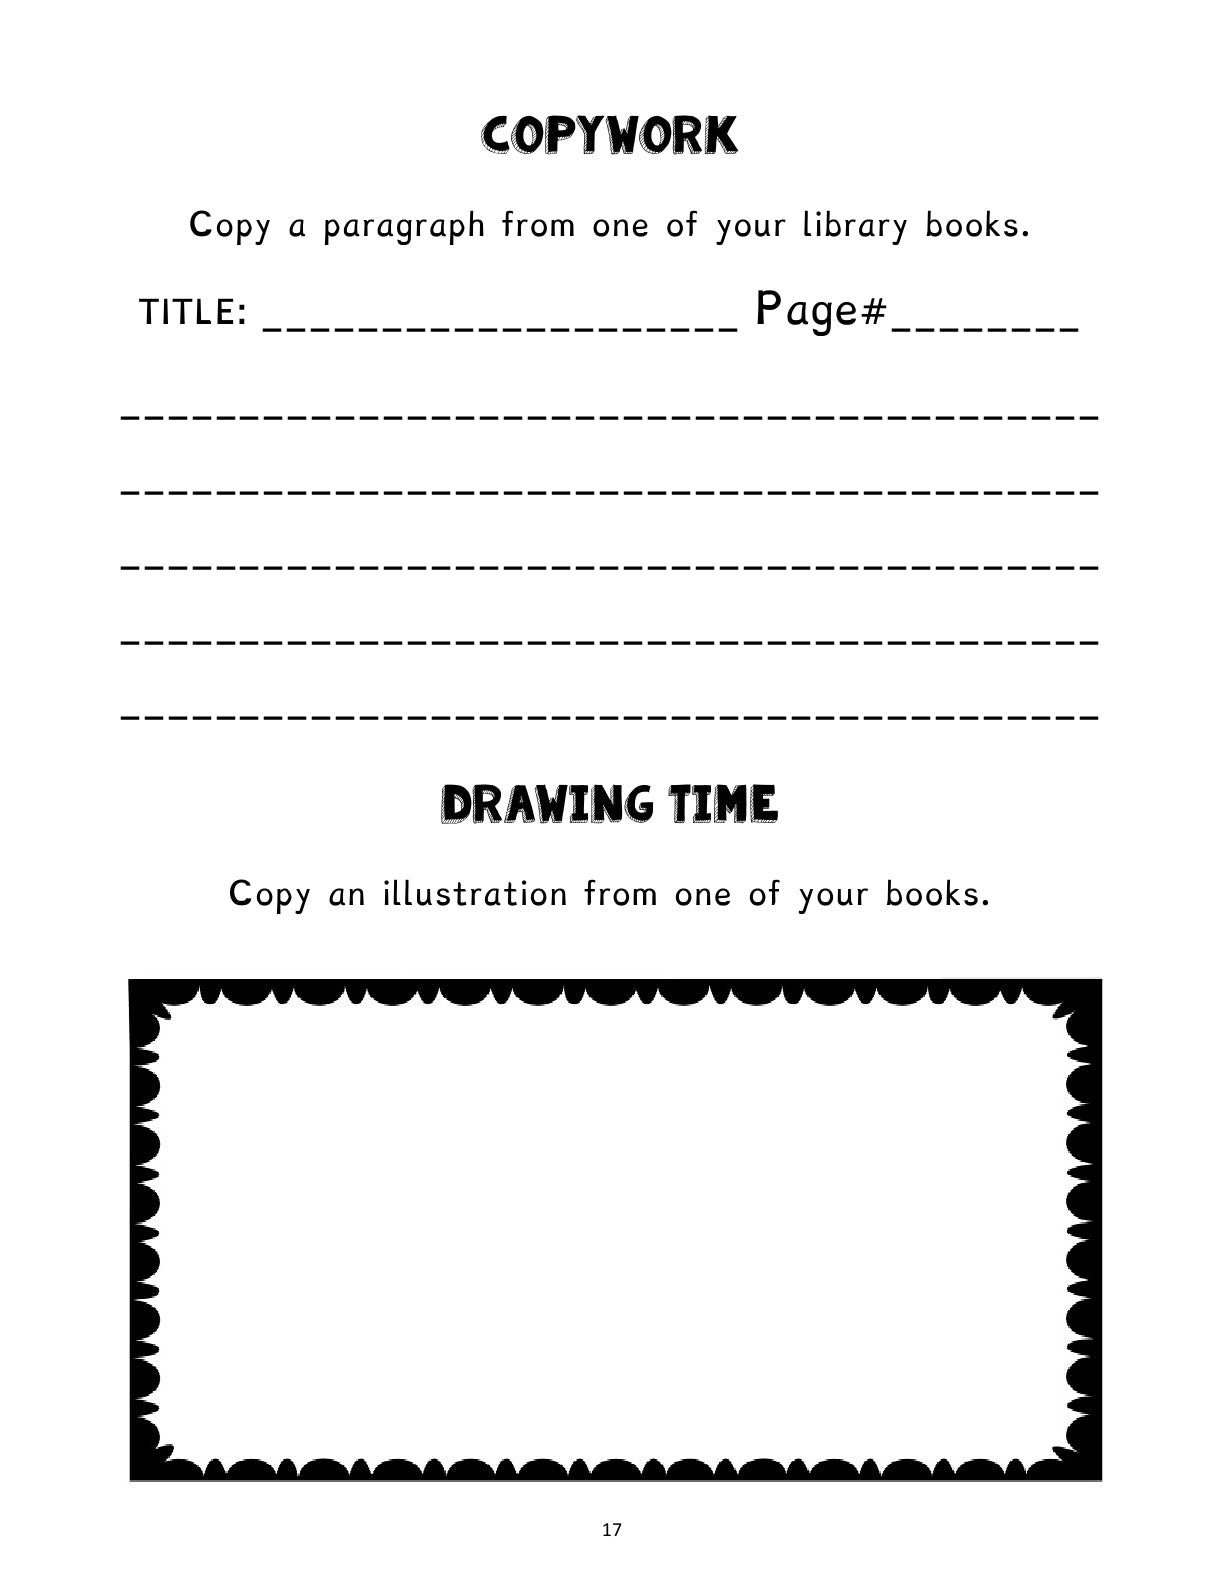 (Age 8+) Curious & Creative Curriculum - Monkey Doodle Fun-Schooling Journal